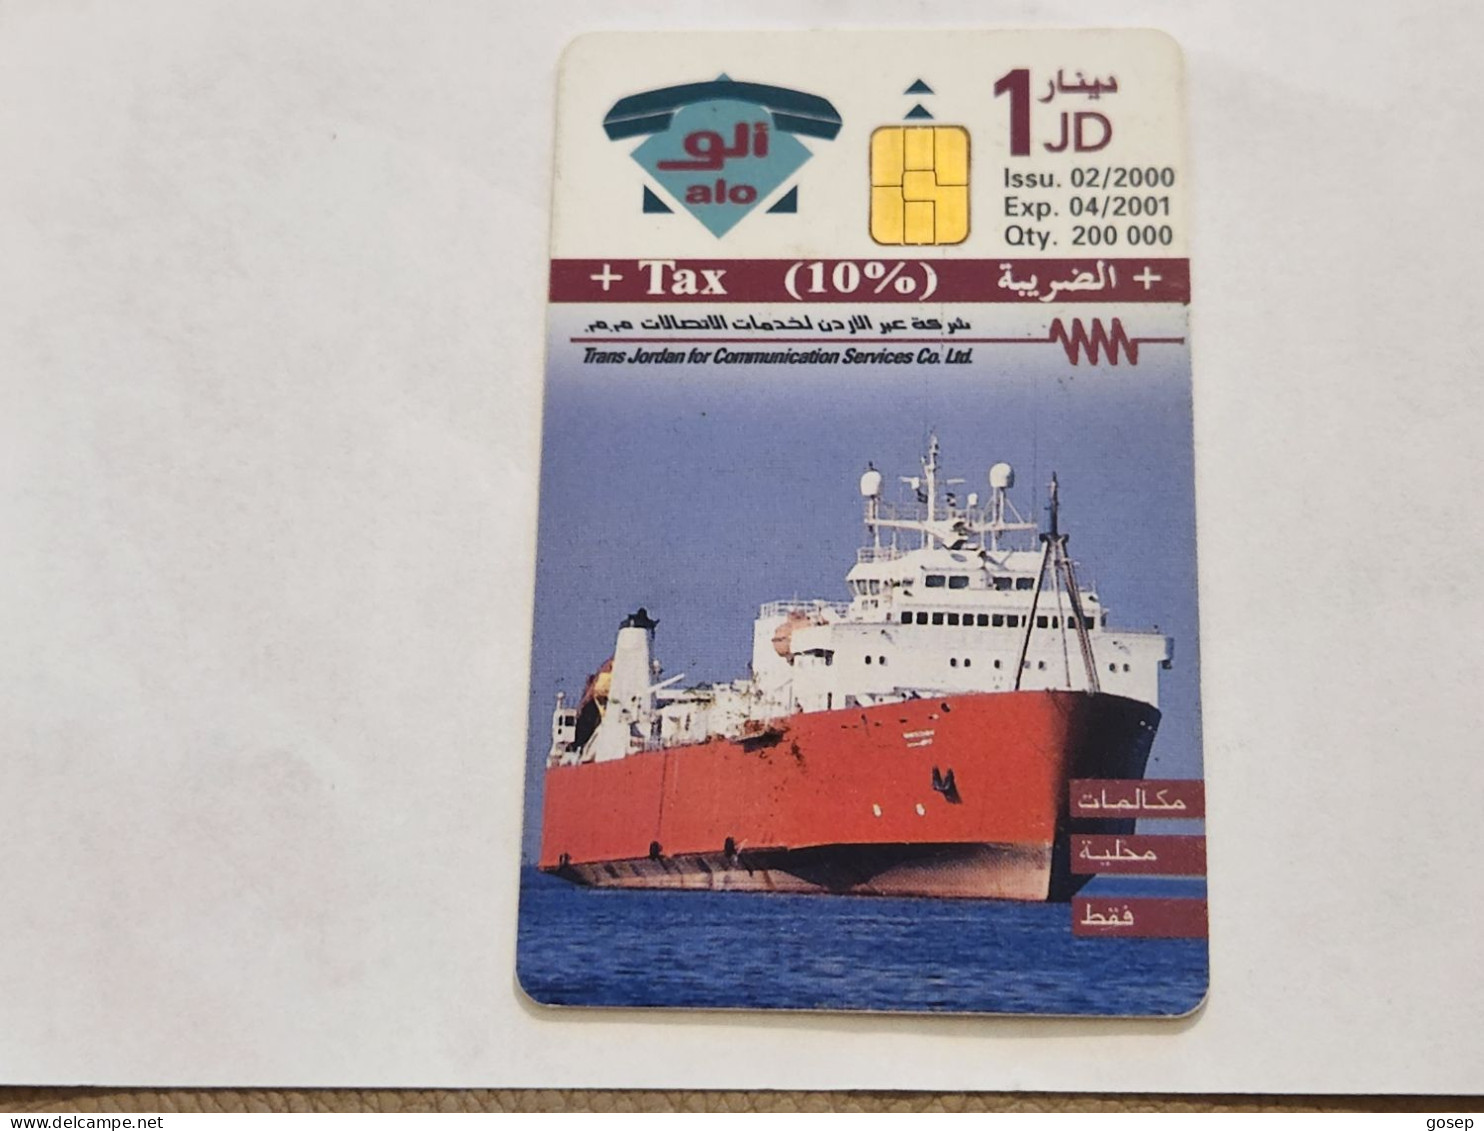 JORDAN-(JO-ALO-0075)-Aqaba Boats-(196)-(1001-568468)-(1JD)-(04/2001)-used Card+1card Prepiad Free - Jordanie